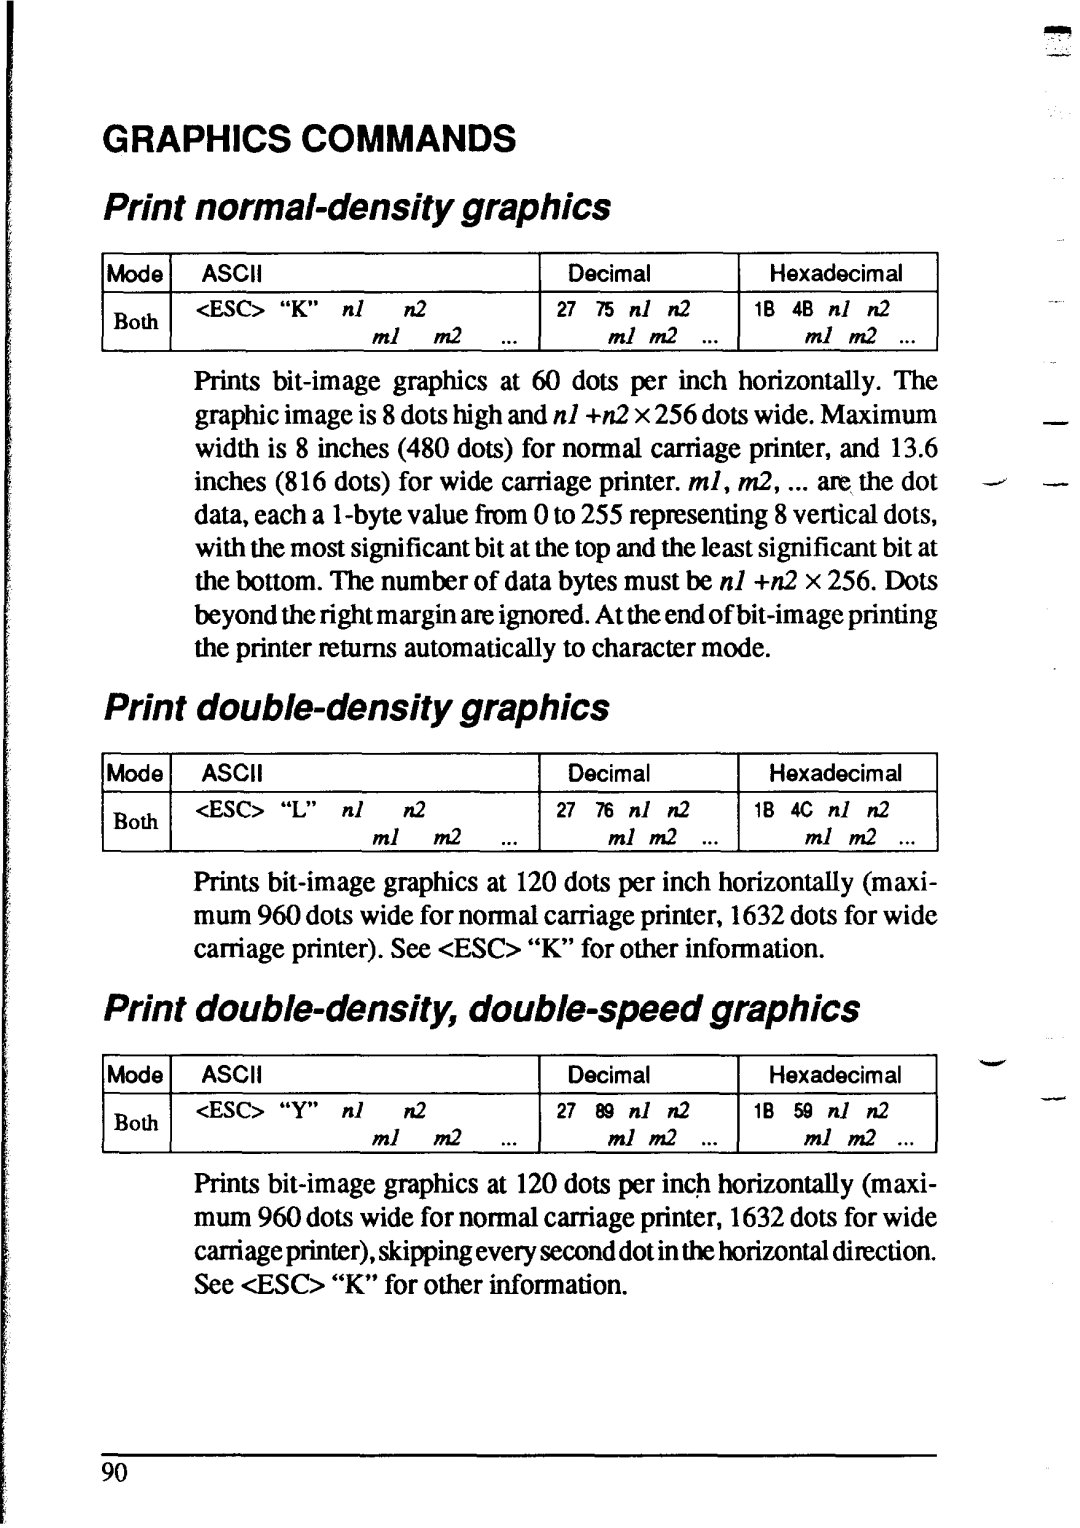 Star Micronics XR-1020, XR-1520 manual Print normal-density graphics, Print double-density graphics, Graphics Commands 